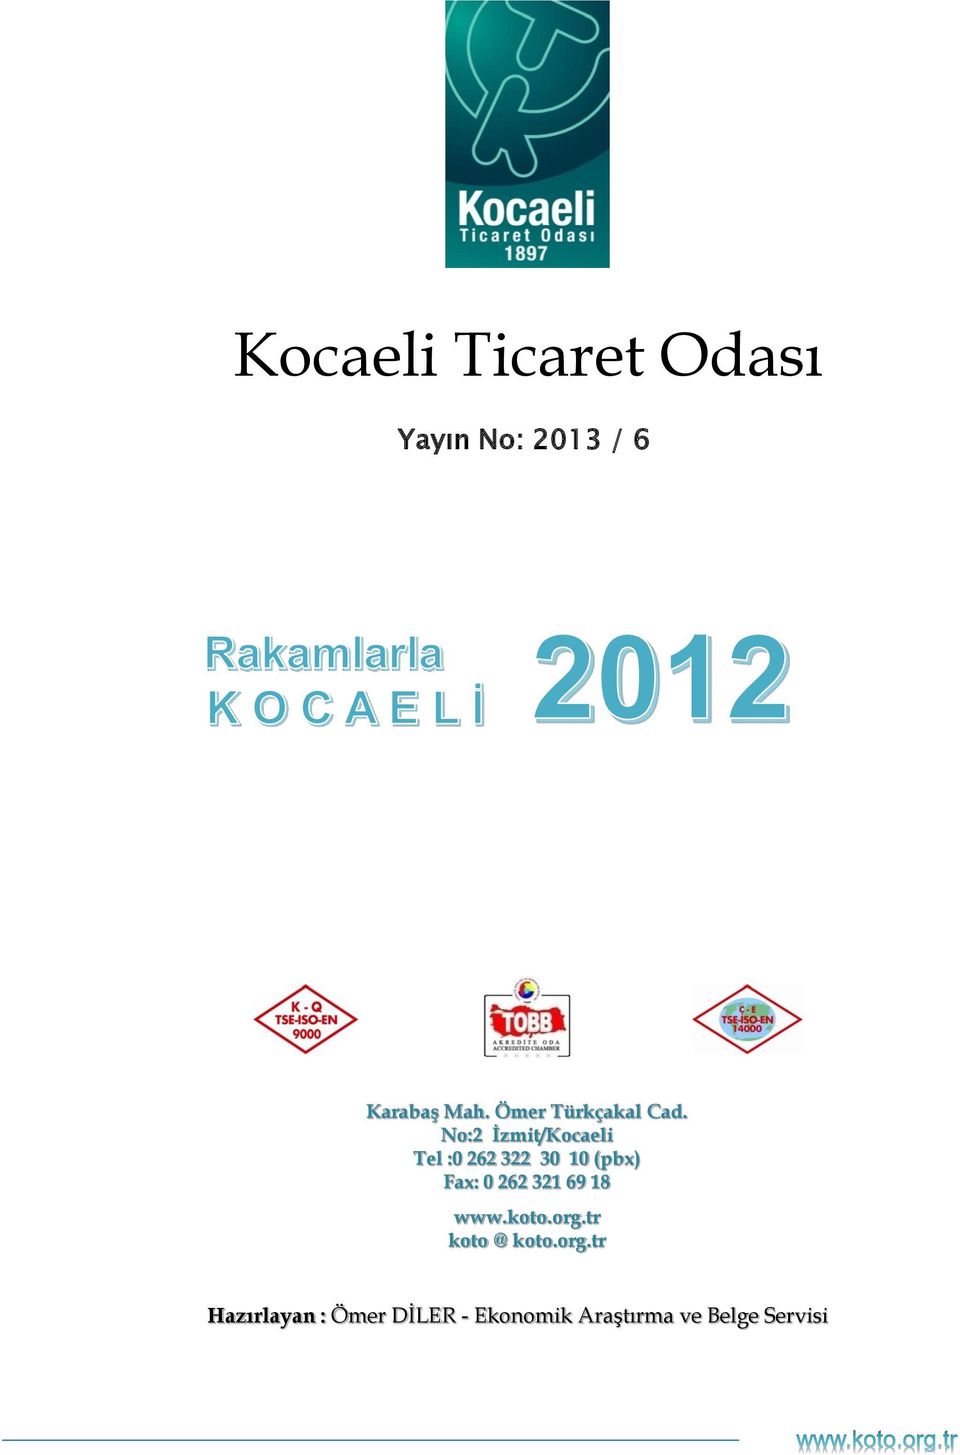 No:2 İzmit/Kocaeli Tel :0 262 322 30 10 (pbx) Fax: 0